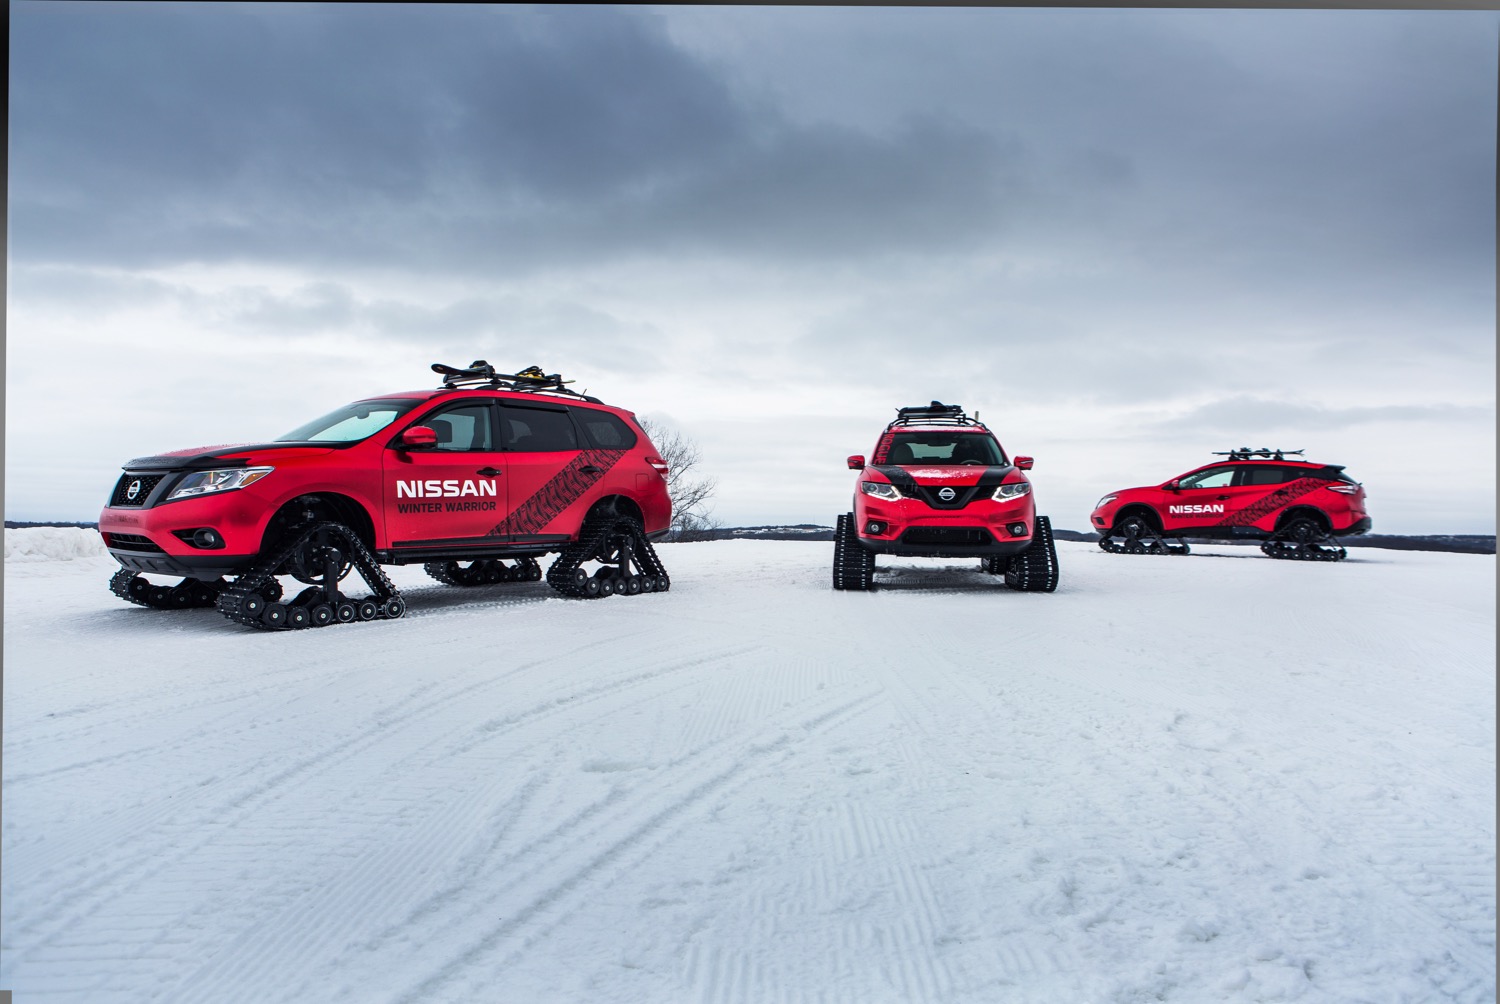 Nissan Pathfinder, Rogue, Murano Winter Warrior concepts